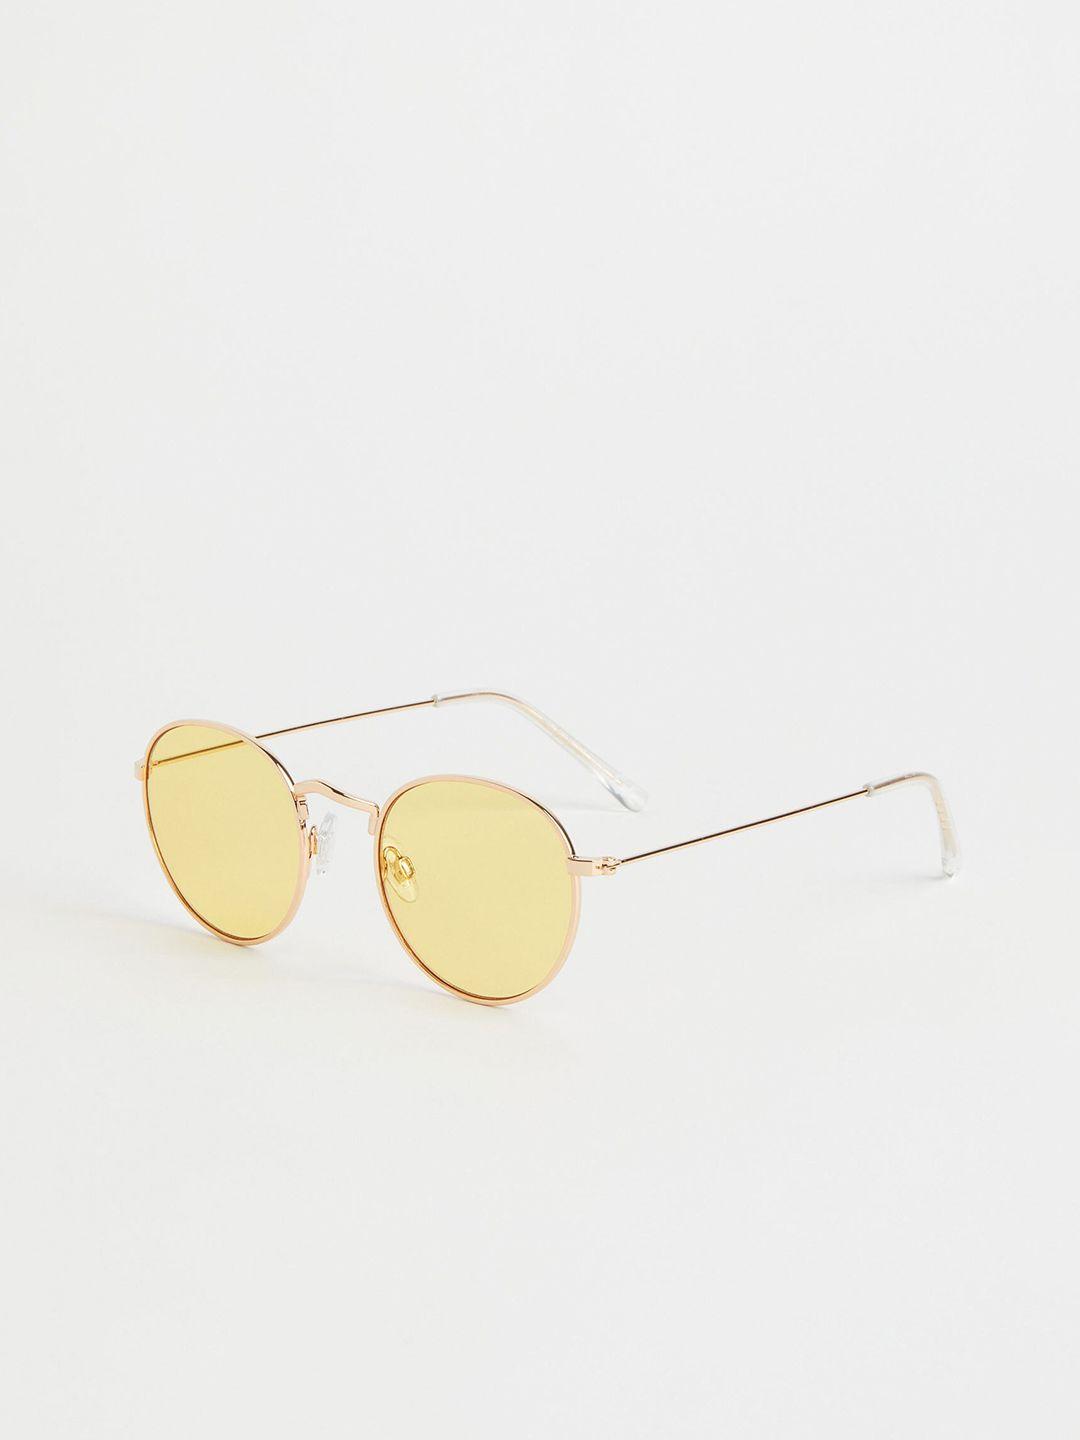 h&m men yellow & gold-toned round sunglasses